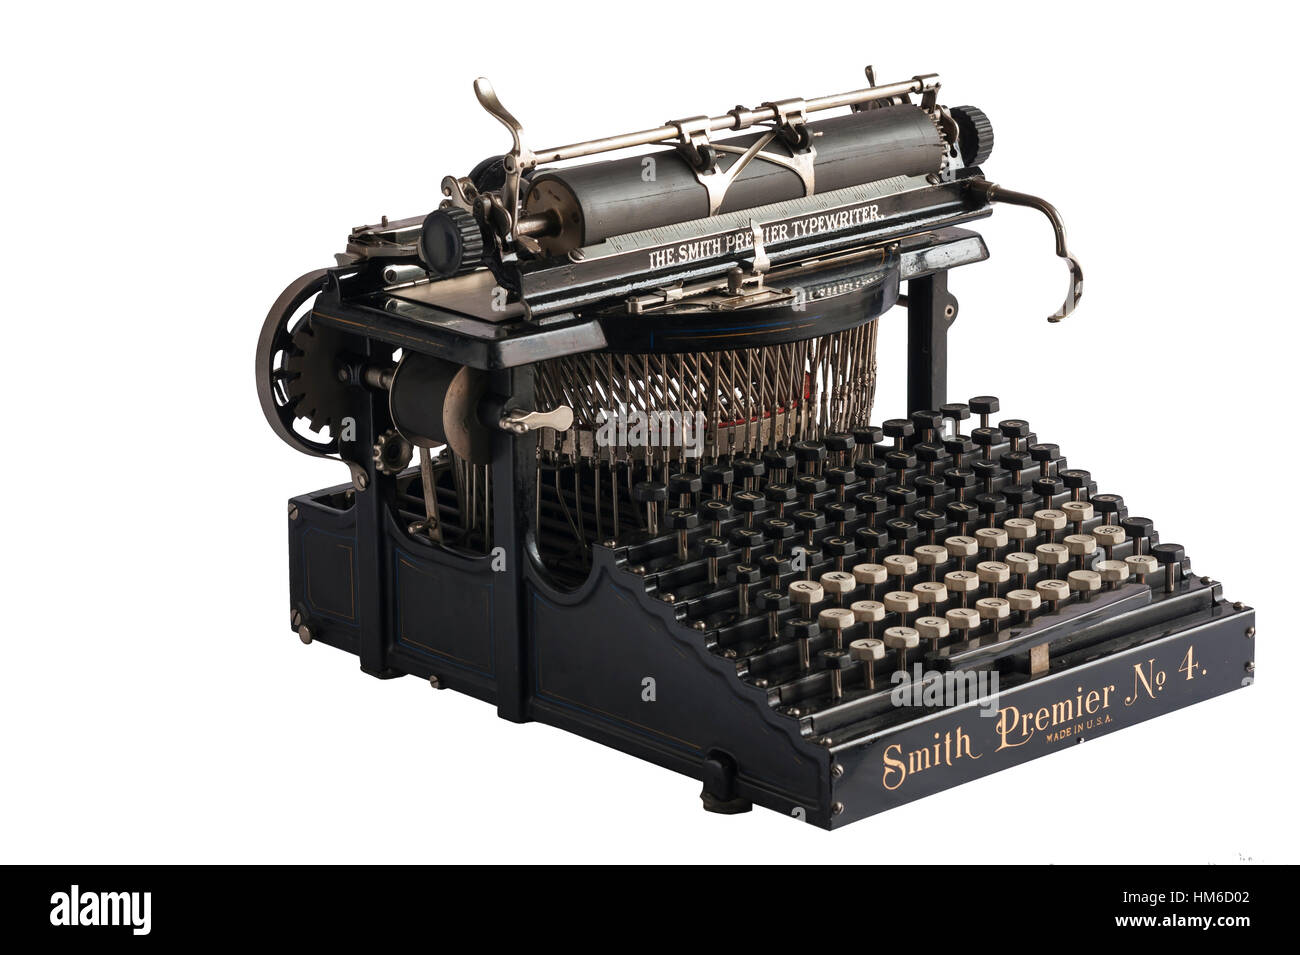 American Typewriter Smith Premier, Industrial Museum Lauf, Lauf an der Pegnitz, Middle Franconia, Bavaria, Germany Stock Photo